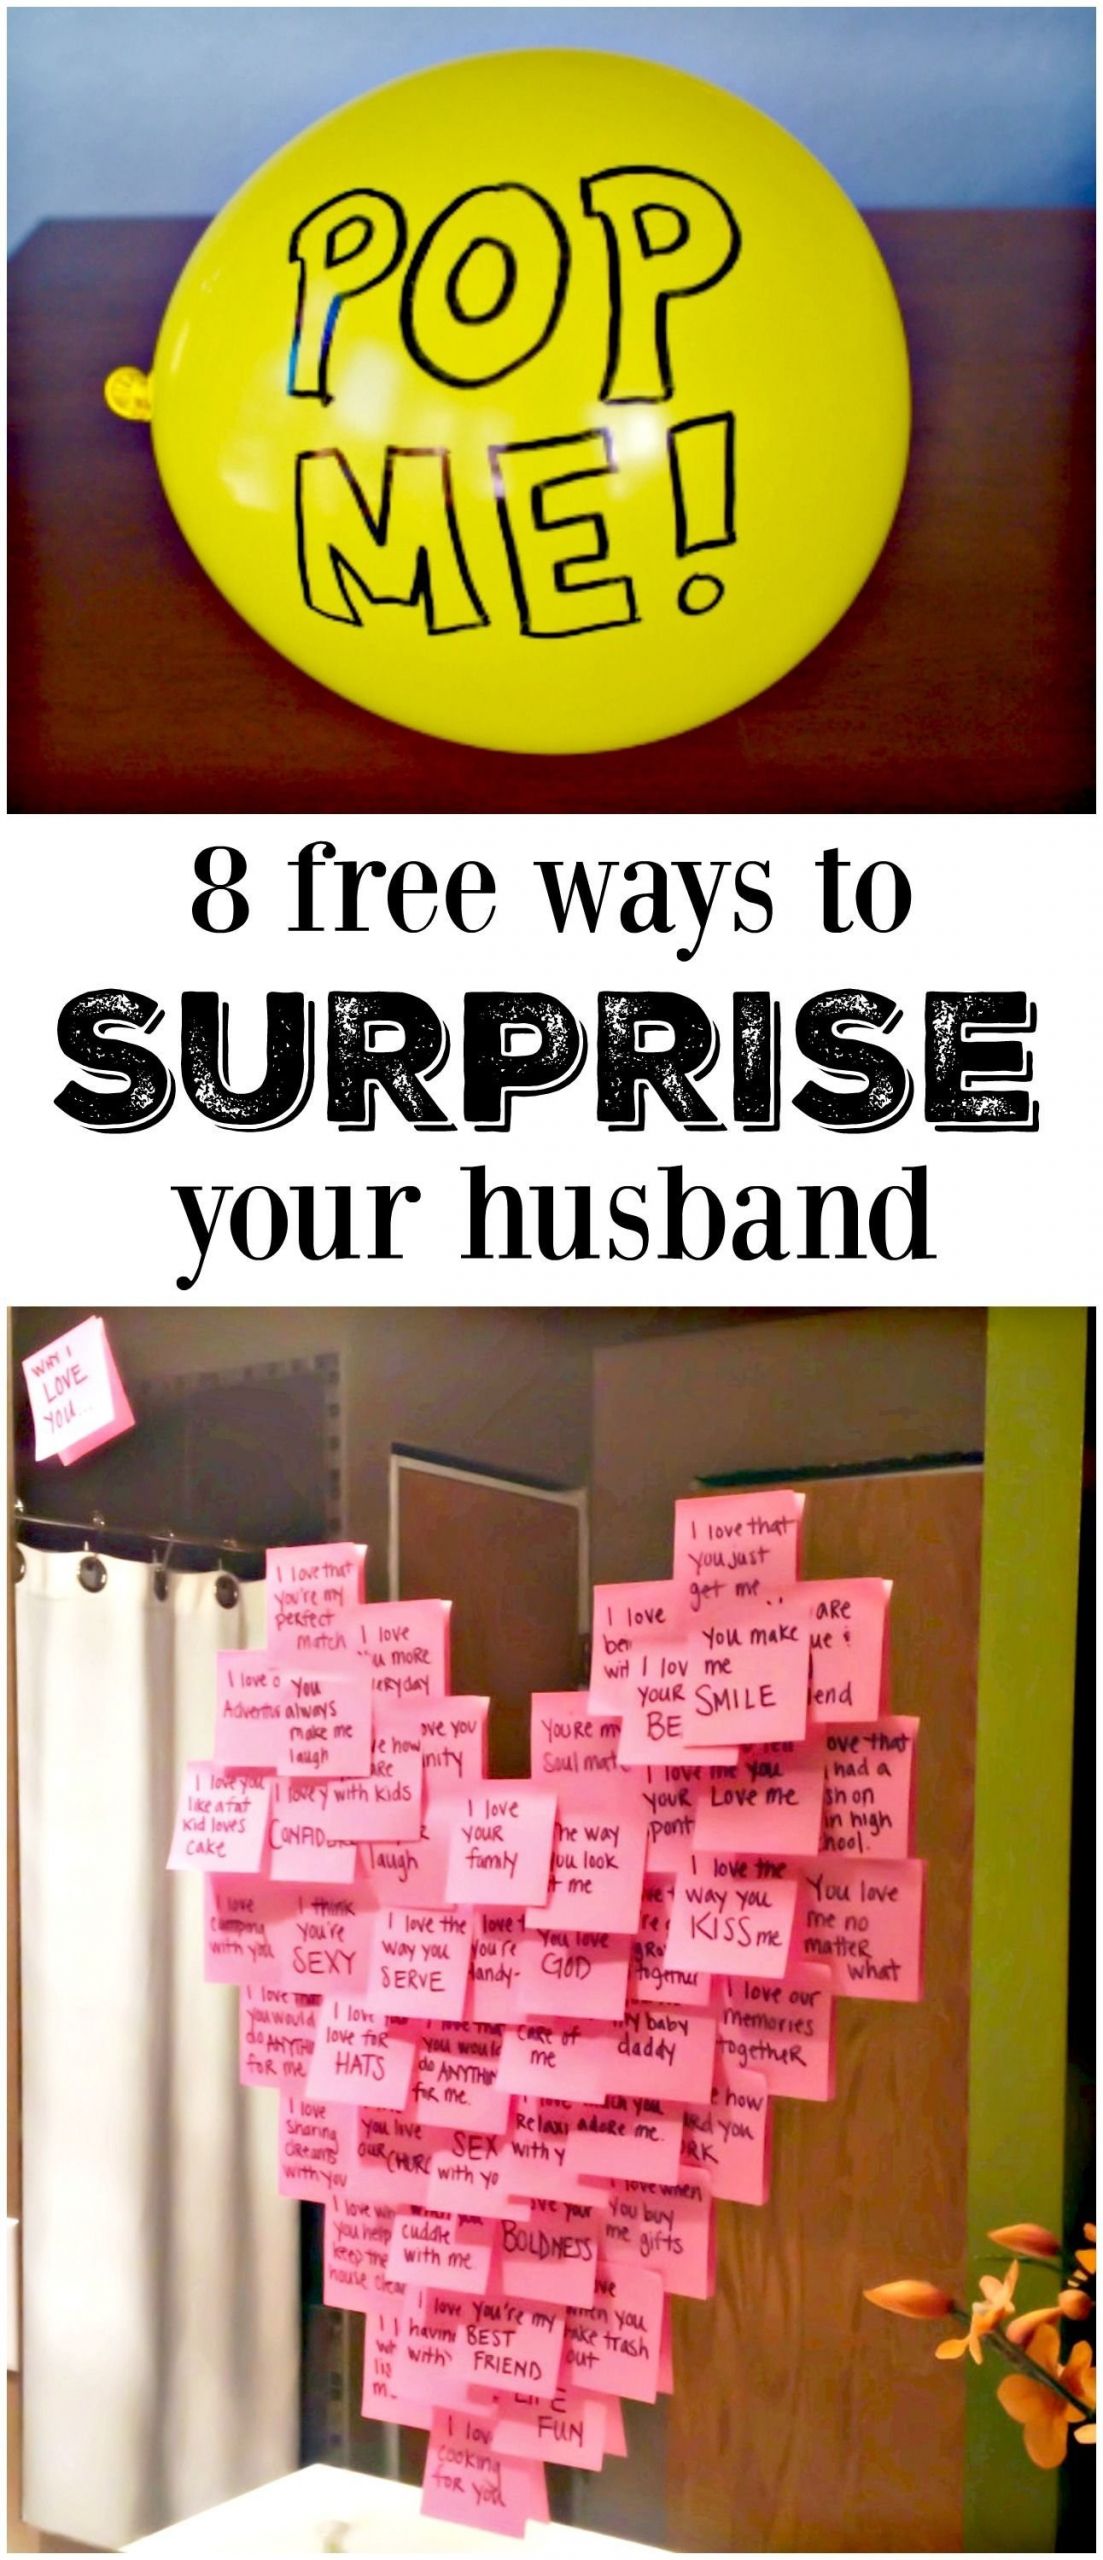 Creative Gift Ideas For Husband Birthday
 10 Amazing Creative Birthday Ideas For Husband 2019